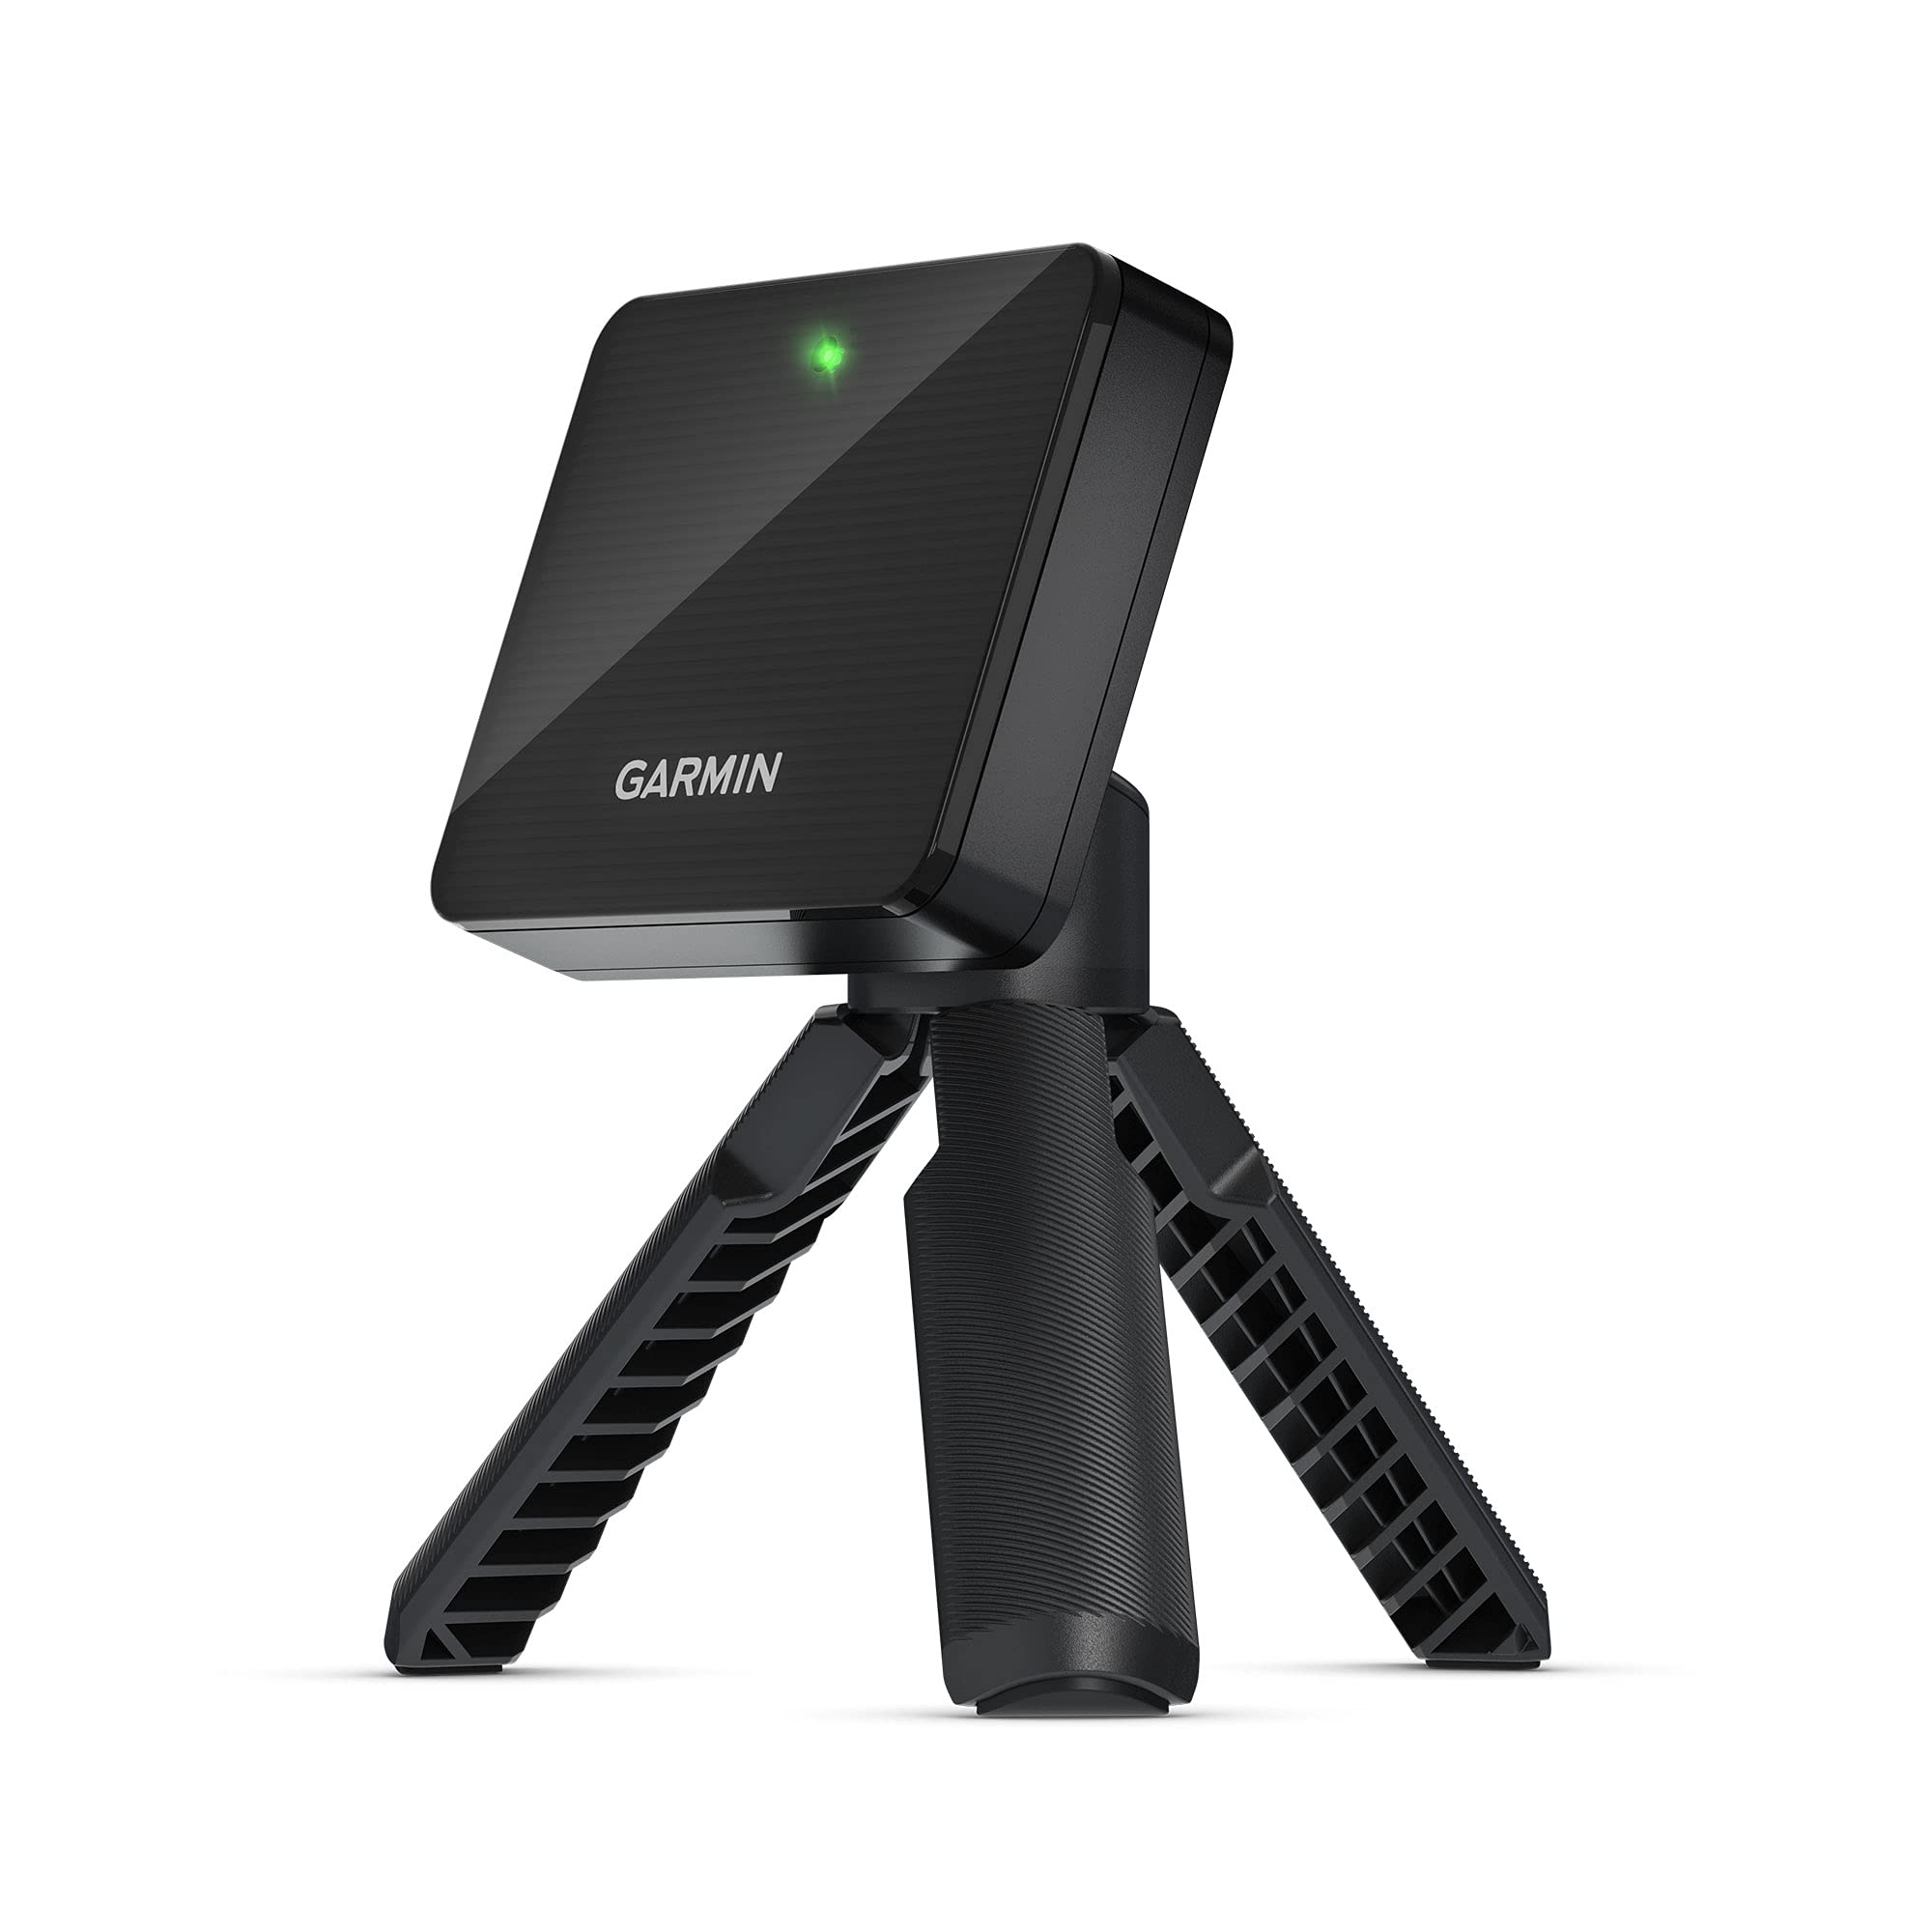 Garmin Approach R10, Portable Golf Launch Monitor $469.99 Amazon